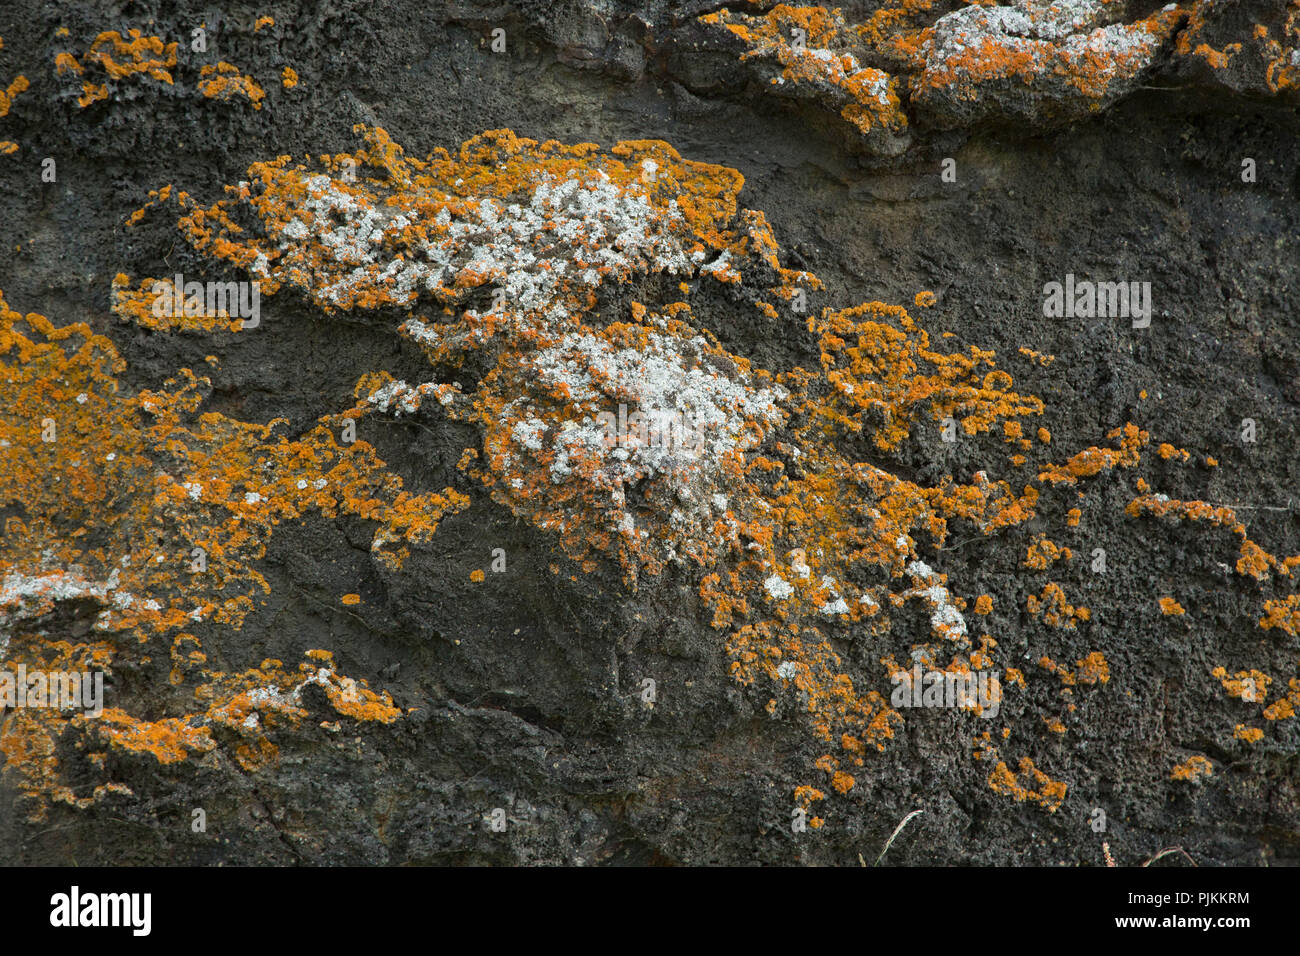 Iceland, Myvatn region, yellow and white lichen on black lava Stock Photo